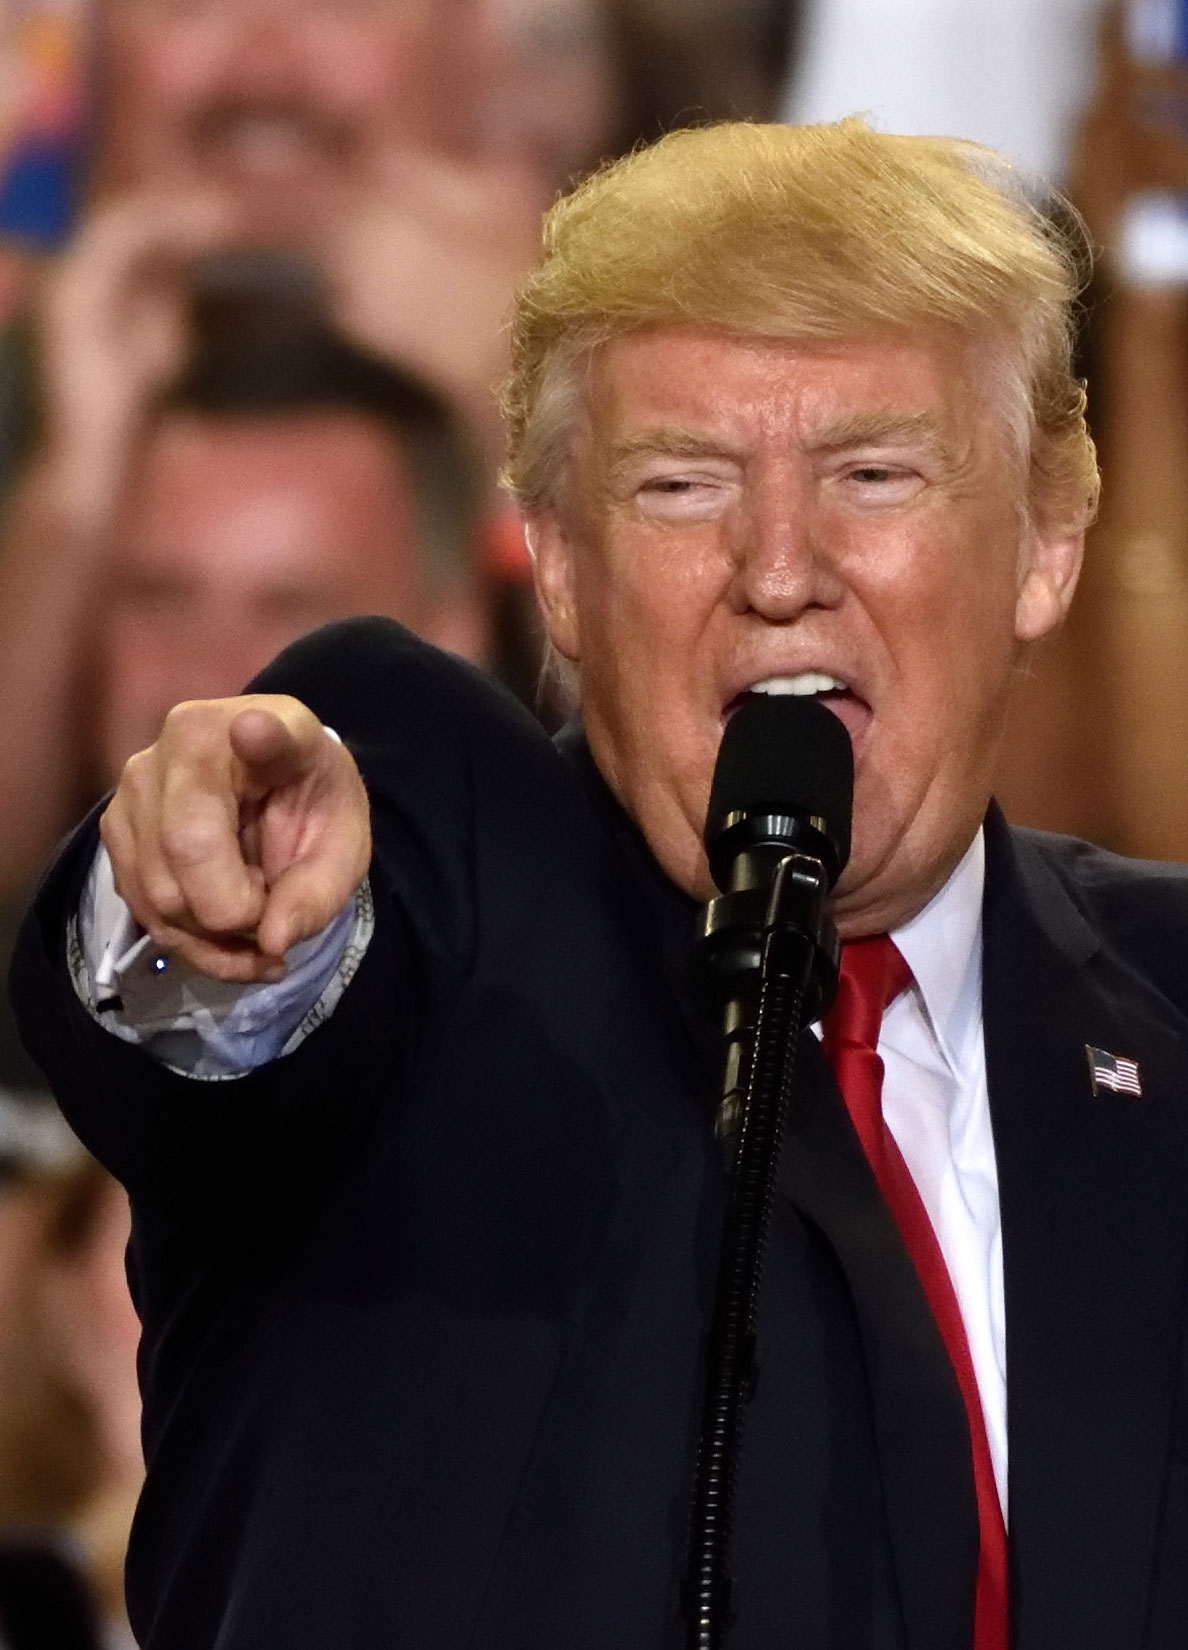 Donald Trump looking angry at a rally